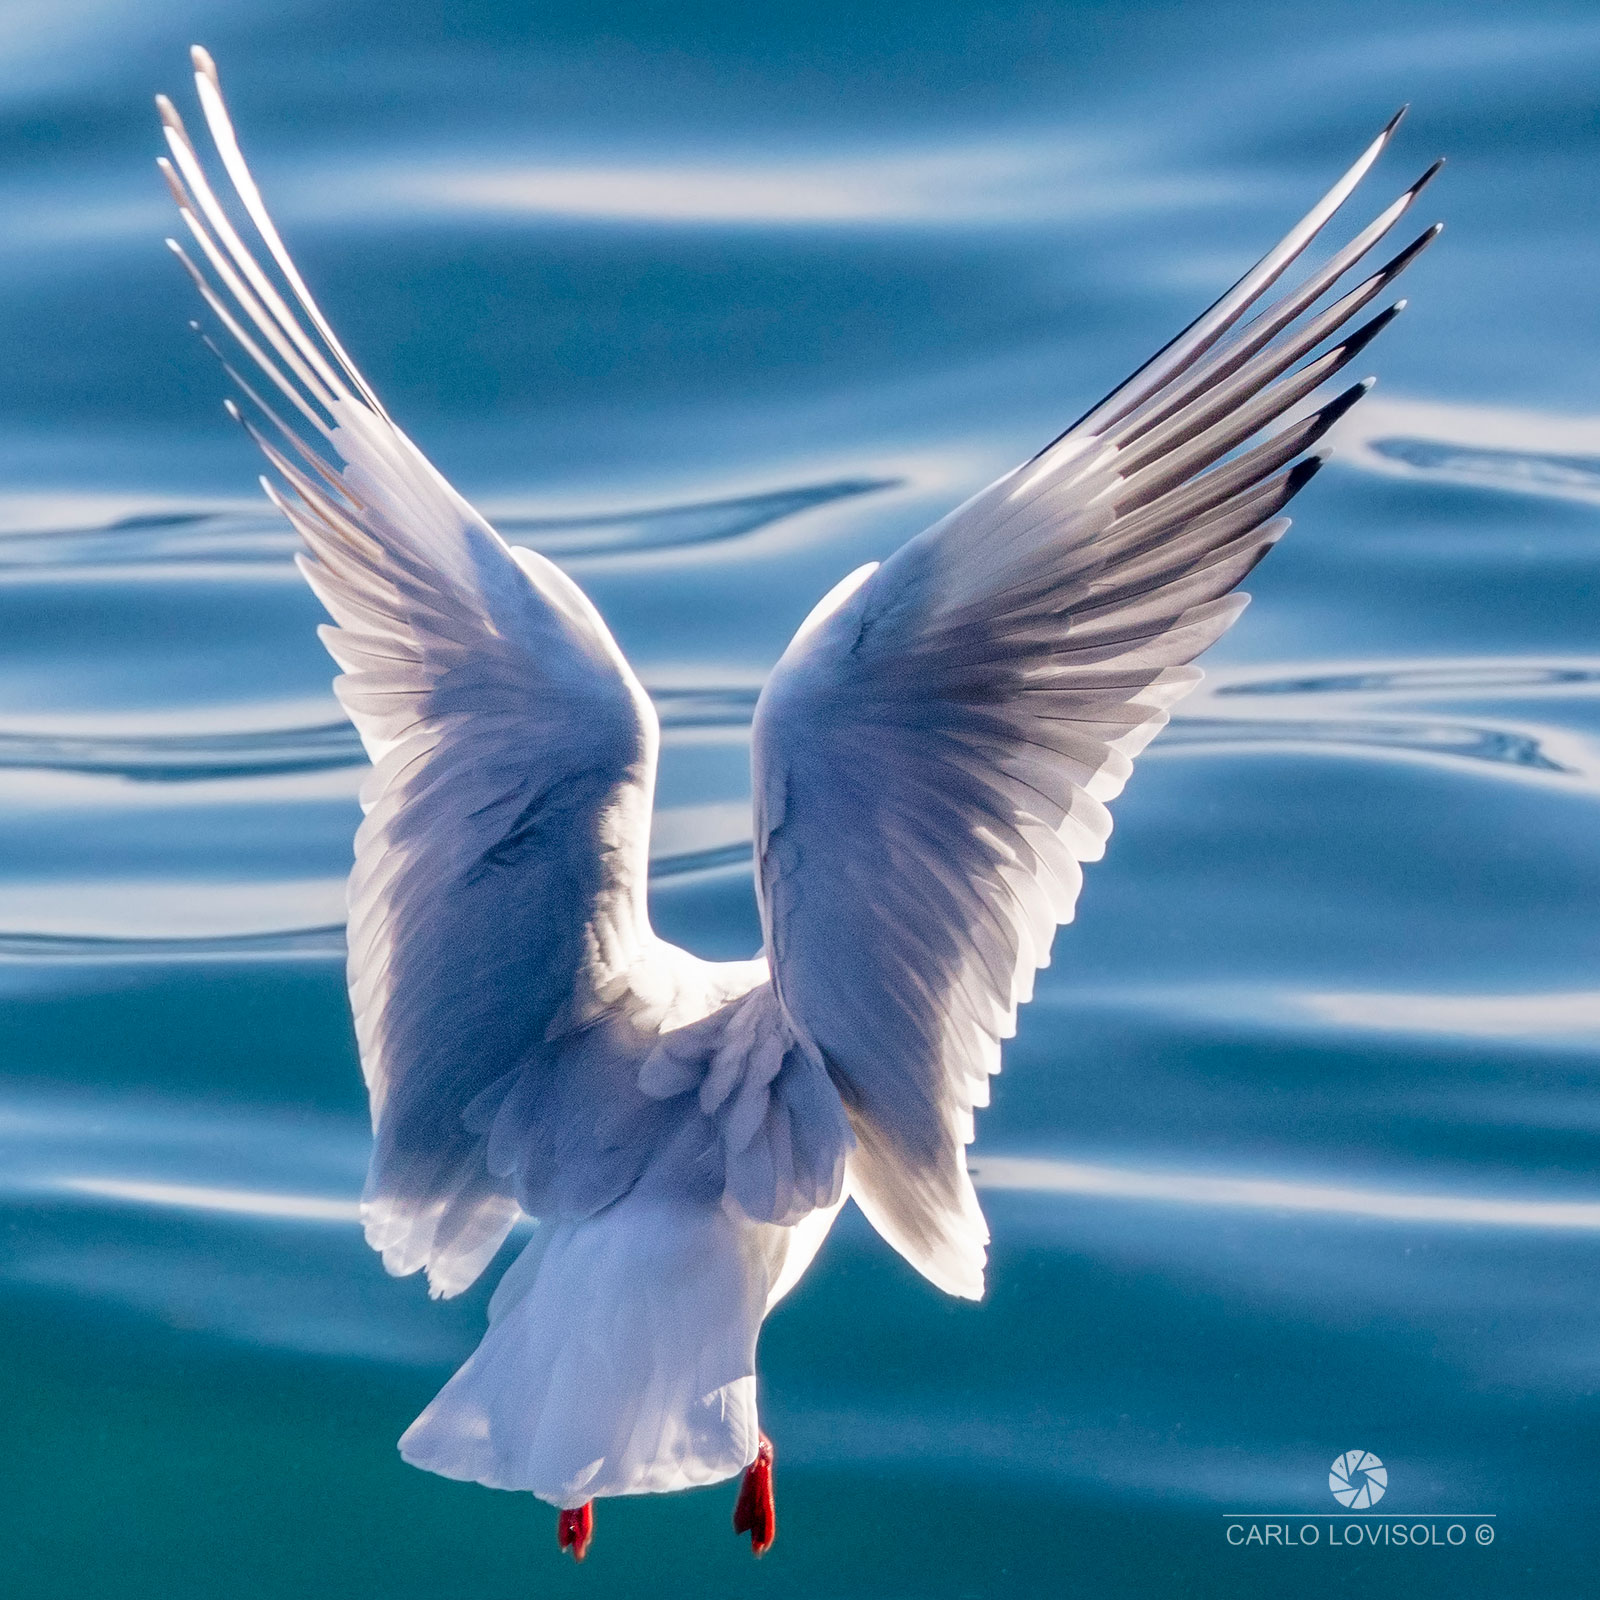 Ligurian sea gull, perhaps the angels exist...